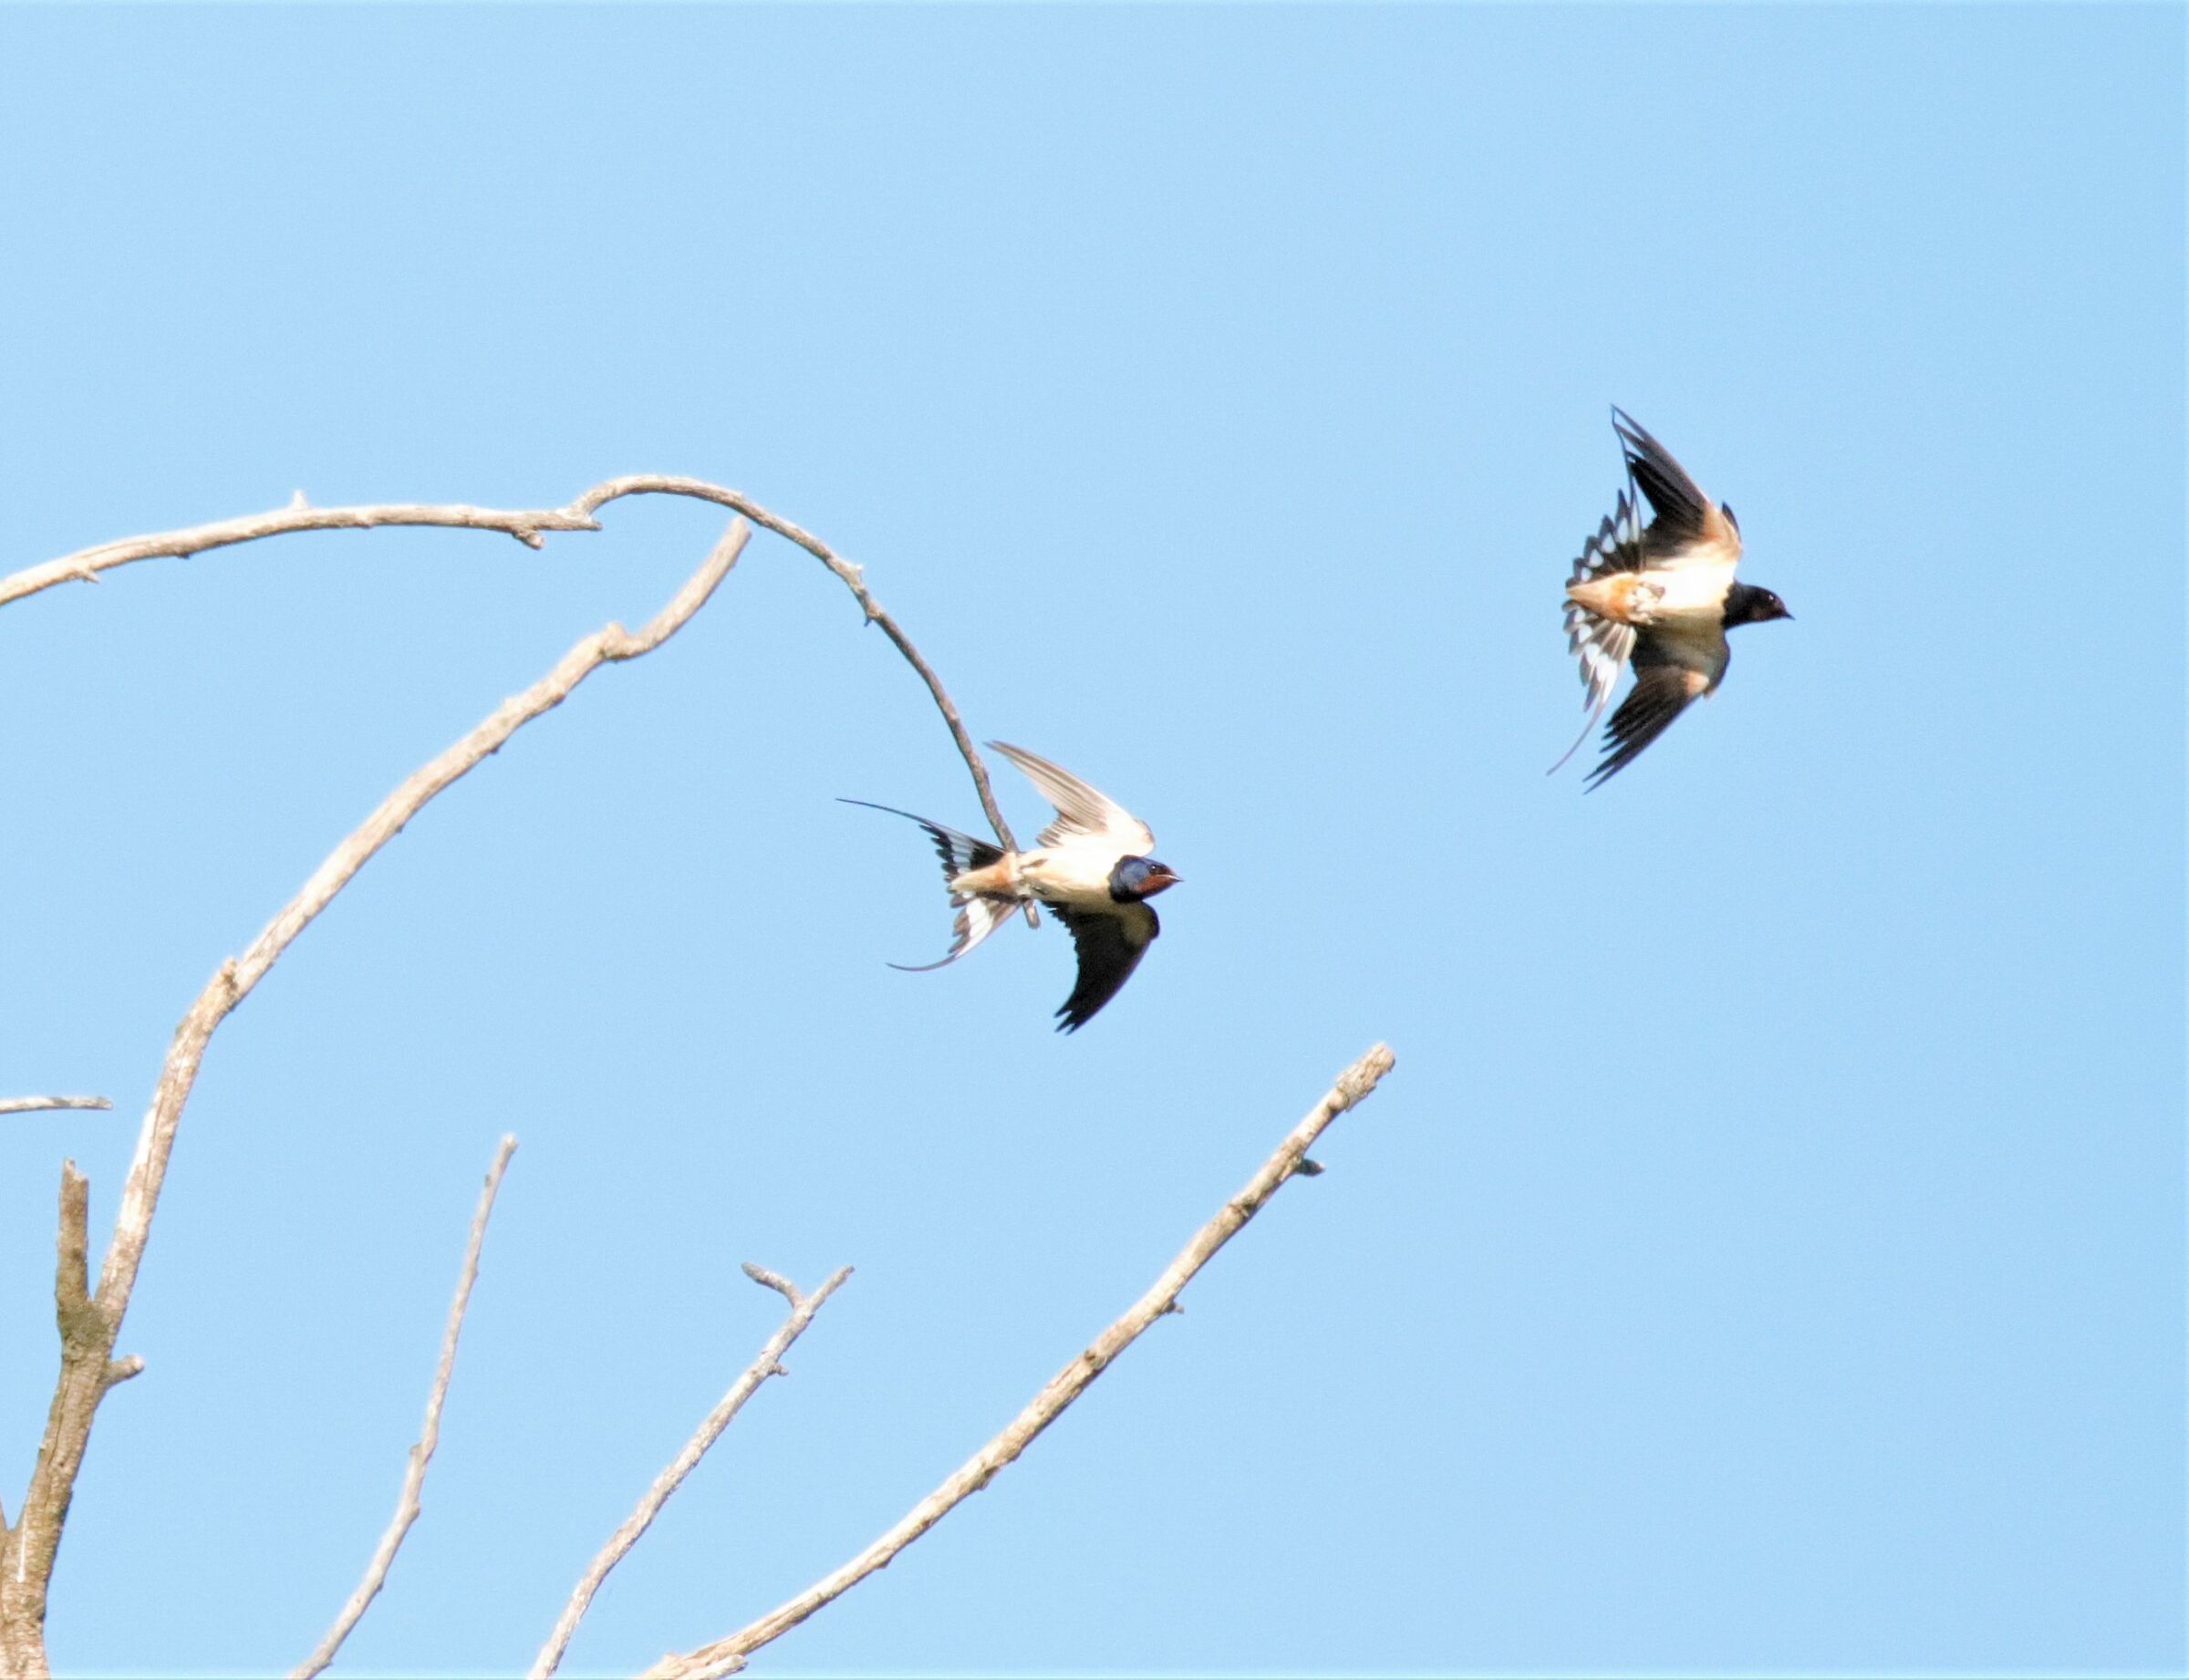 acrobatics between swallows...